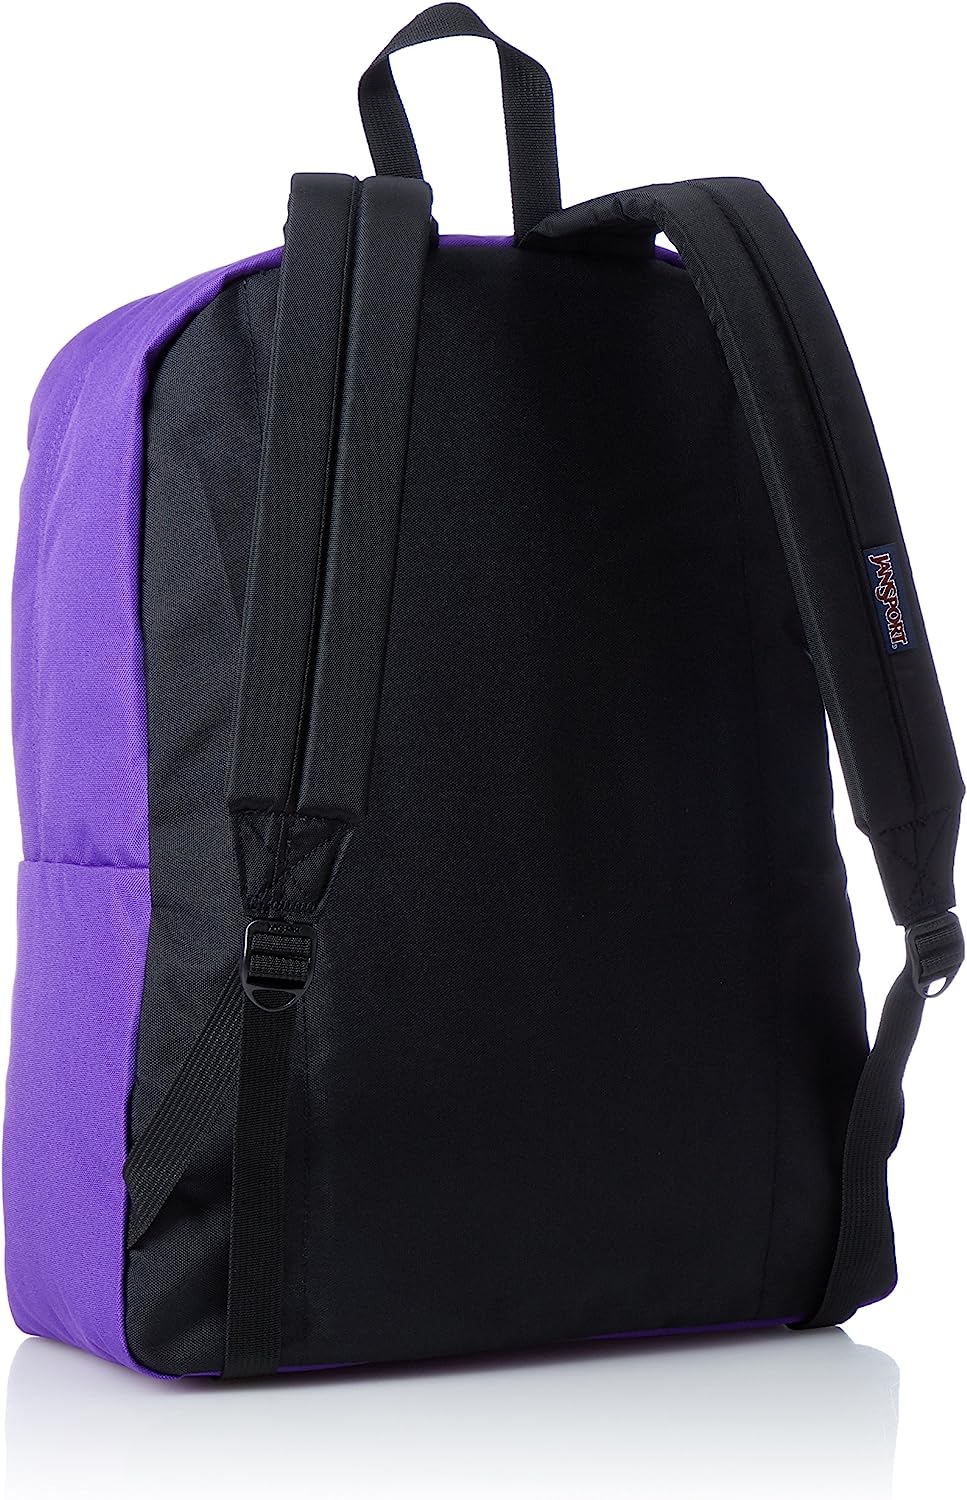 JanSport Superbreak Purple Backpack